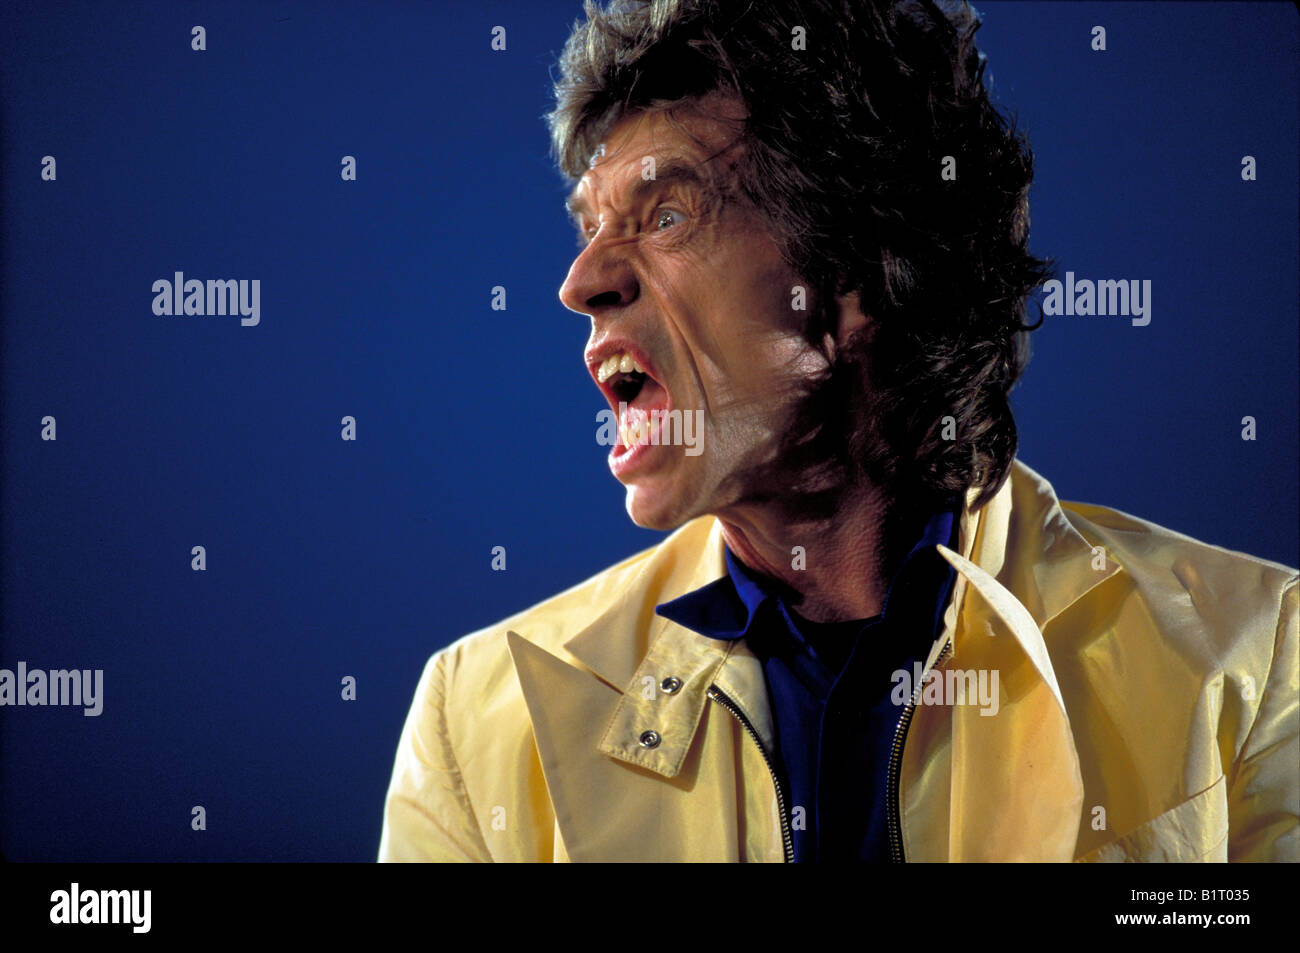 Mick Jagger dei Rolling Stones dal vivo sul palco del Don Valley Stadium, Sheffield UK. Il Voodoo Lounge Tour. Foto Stock